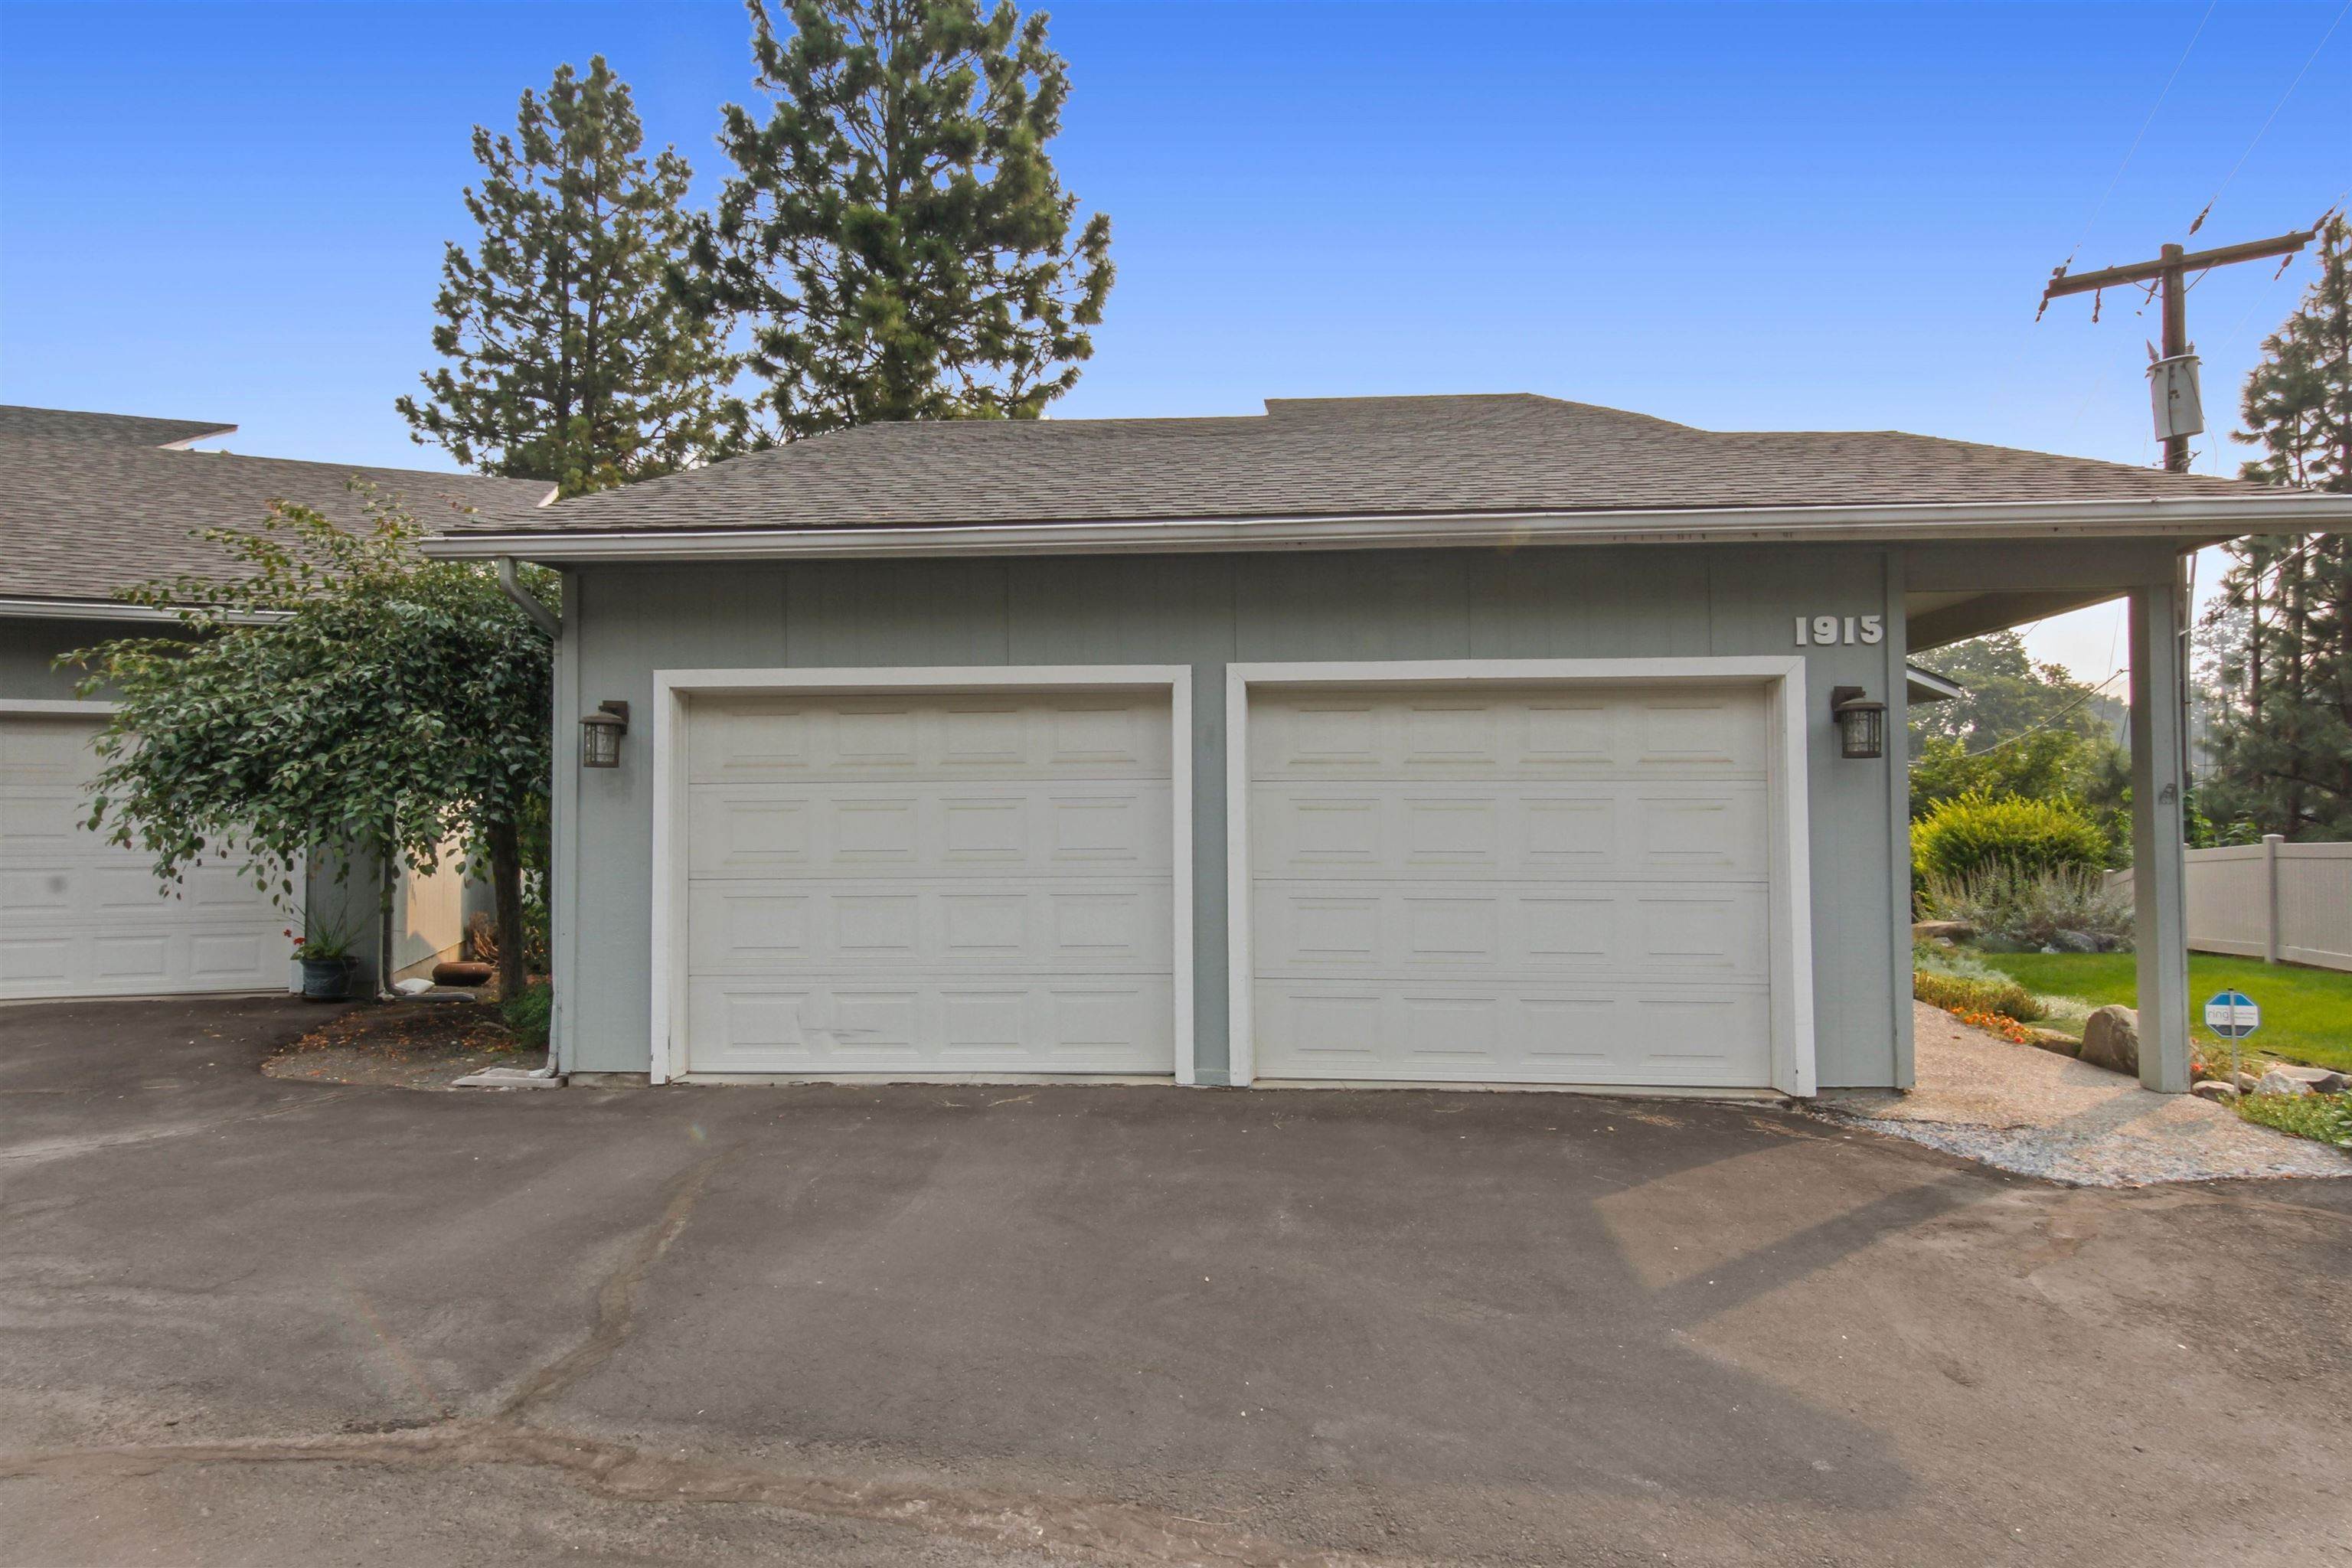 2. Single Family Homes for Sale at 1915 S Greene Street Spokane, Washington 99223 United States